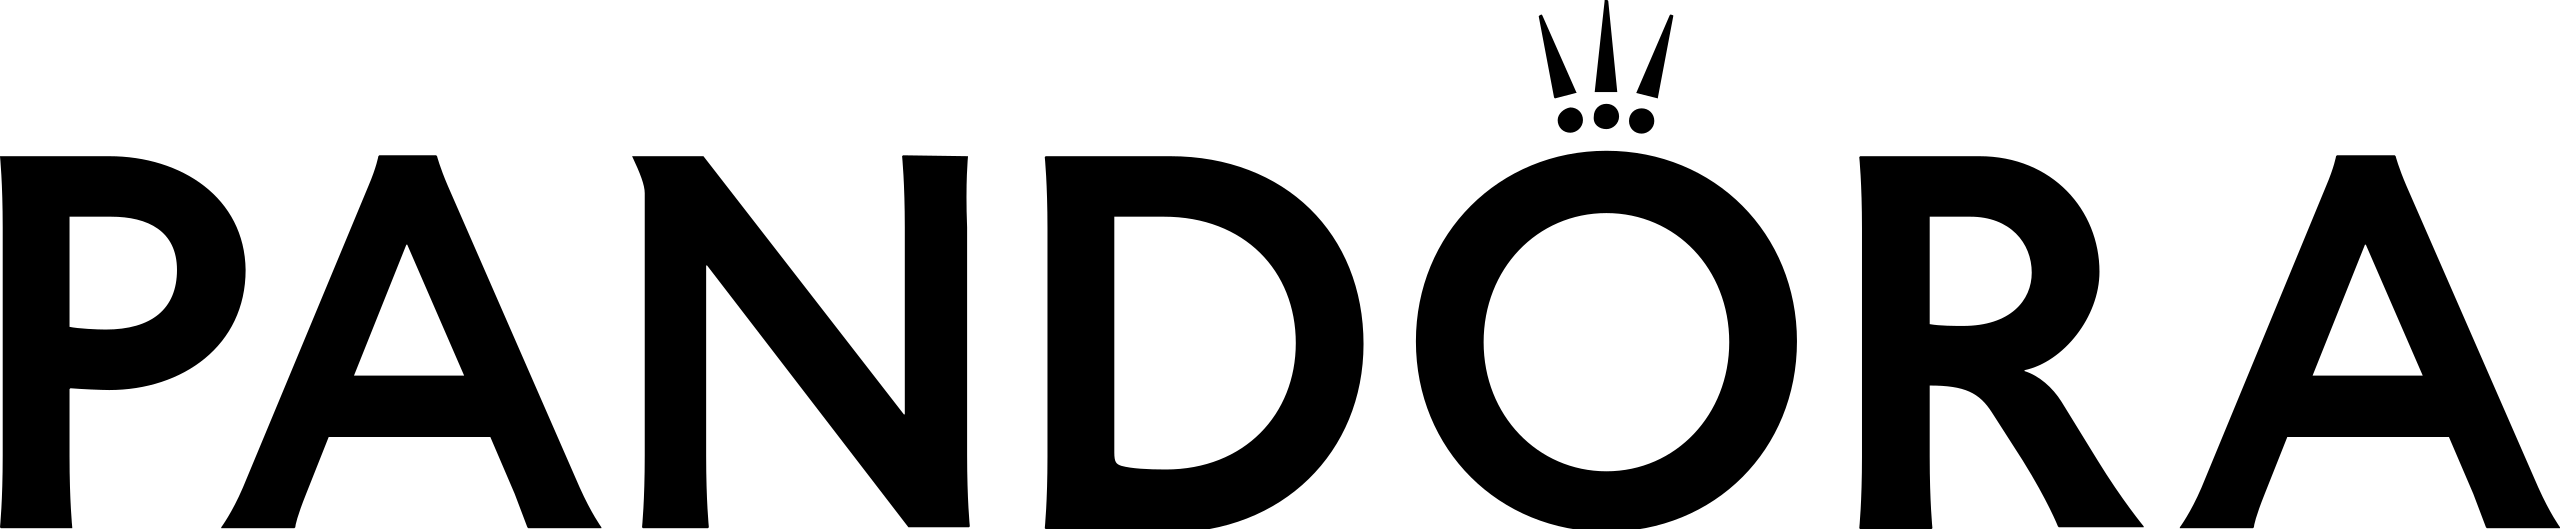 Samle fortjener Emotion File:Pandora Logo 2019.svg - Wikimedia Commons